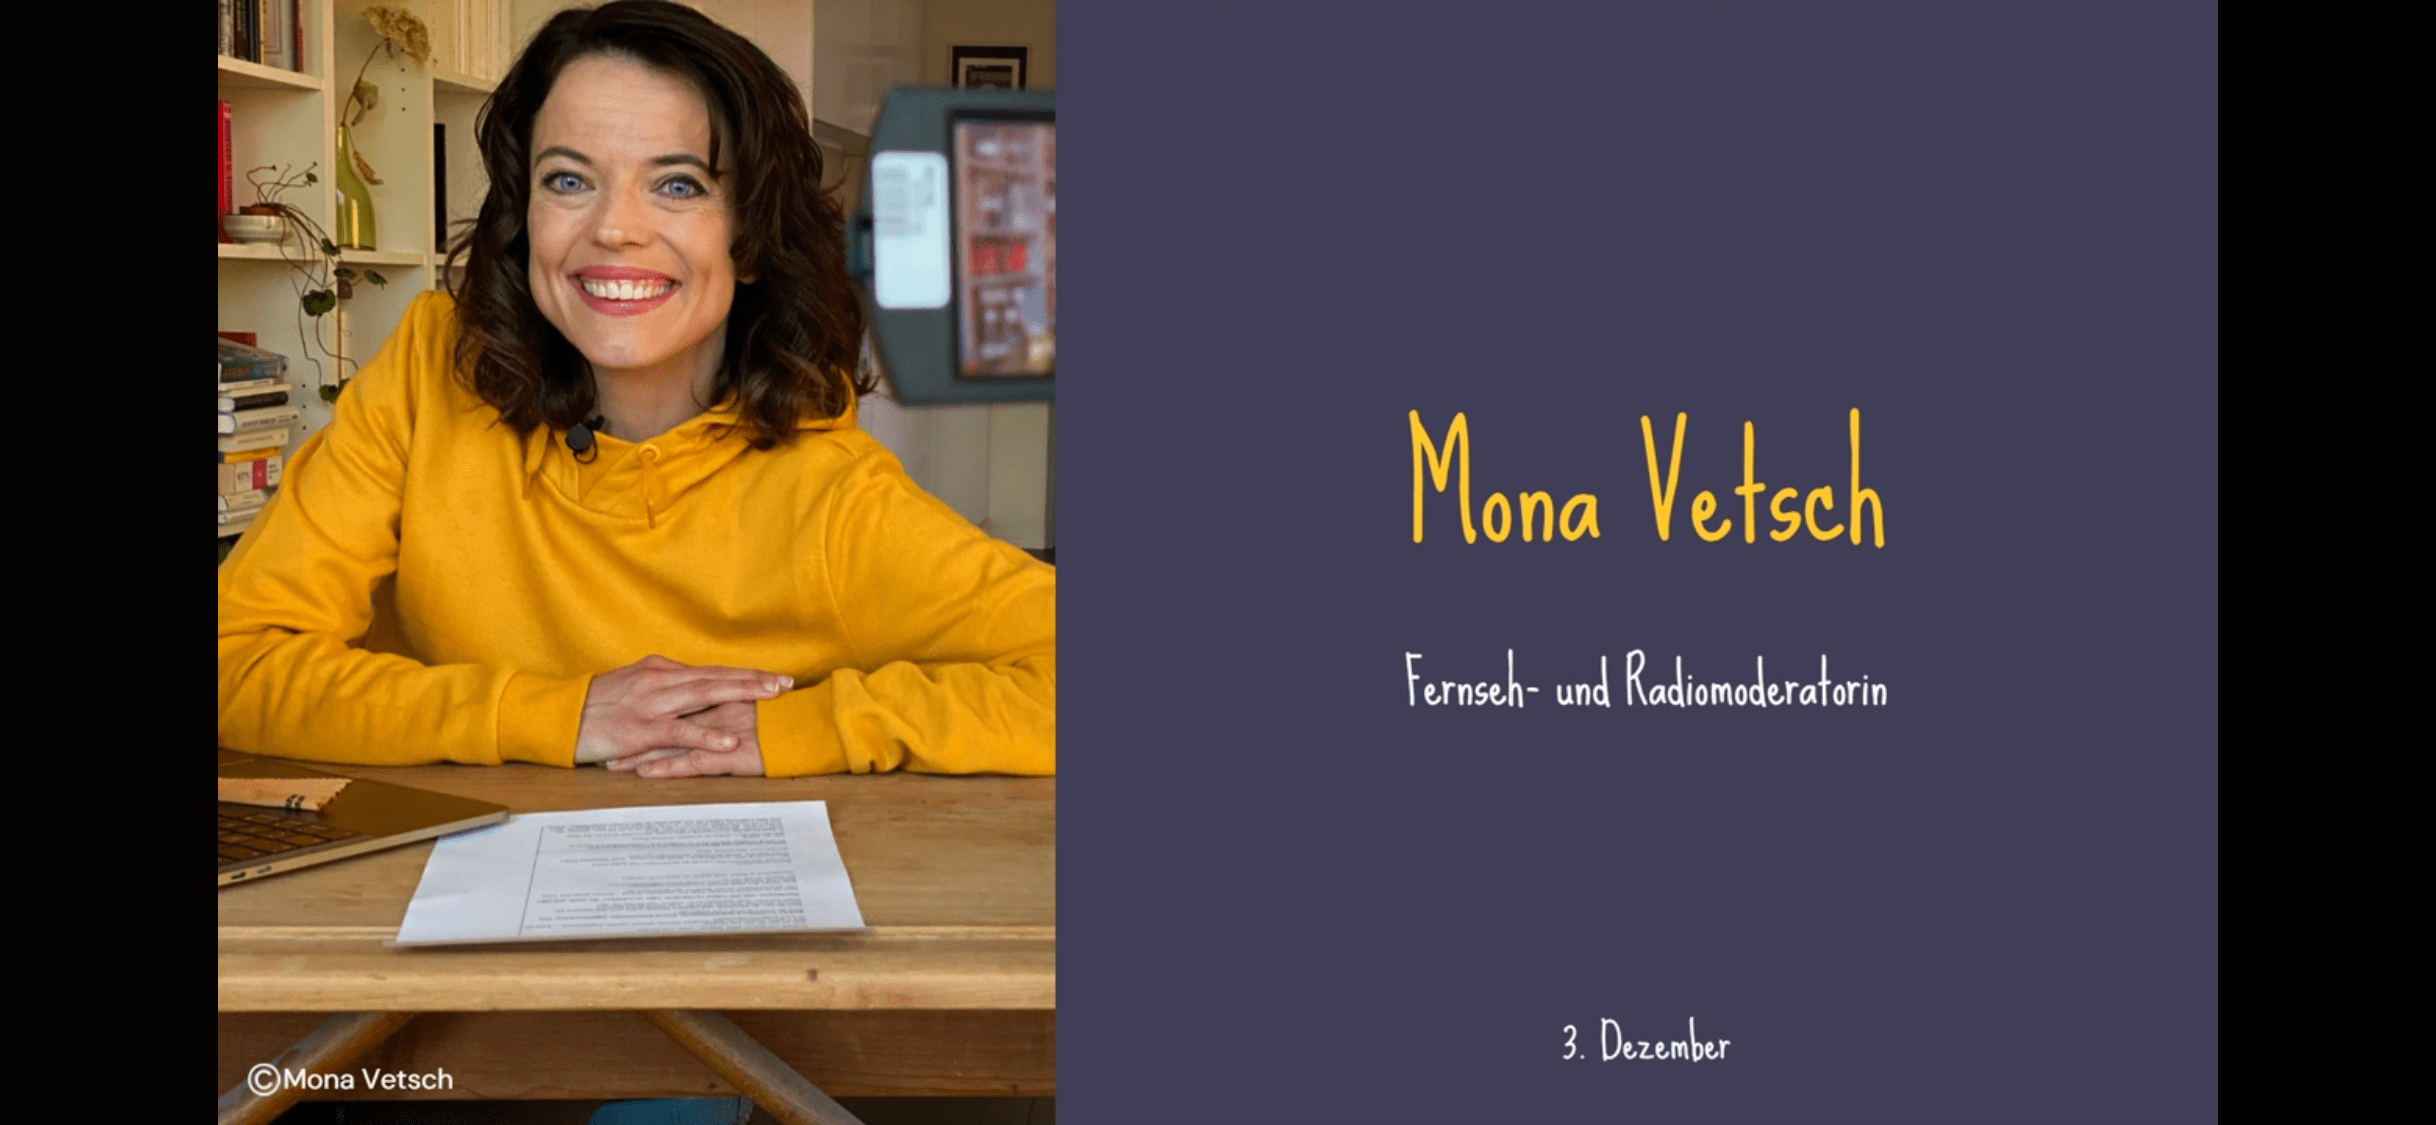 Mona Vetsch